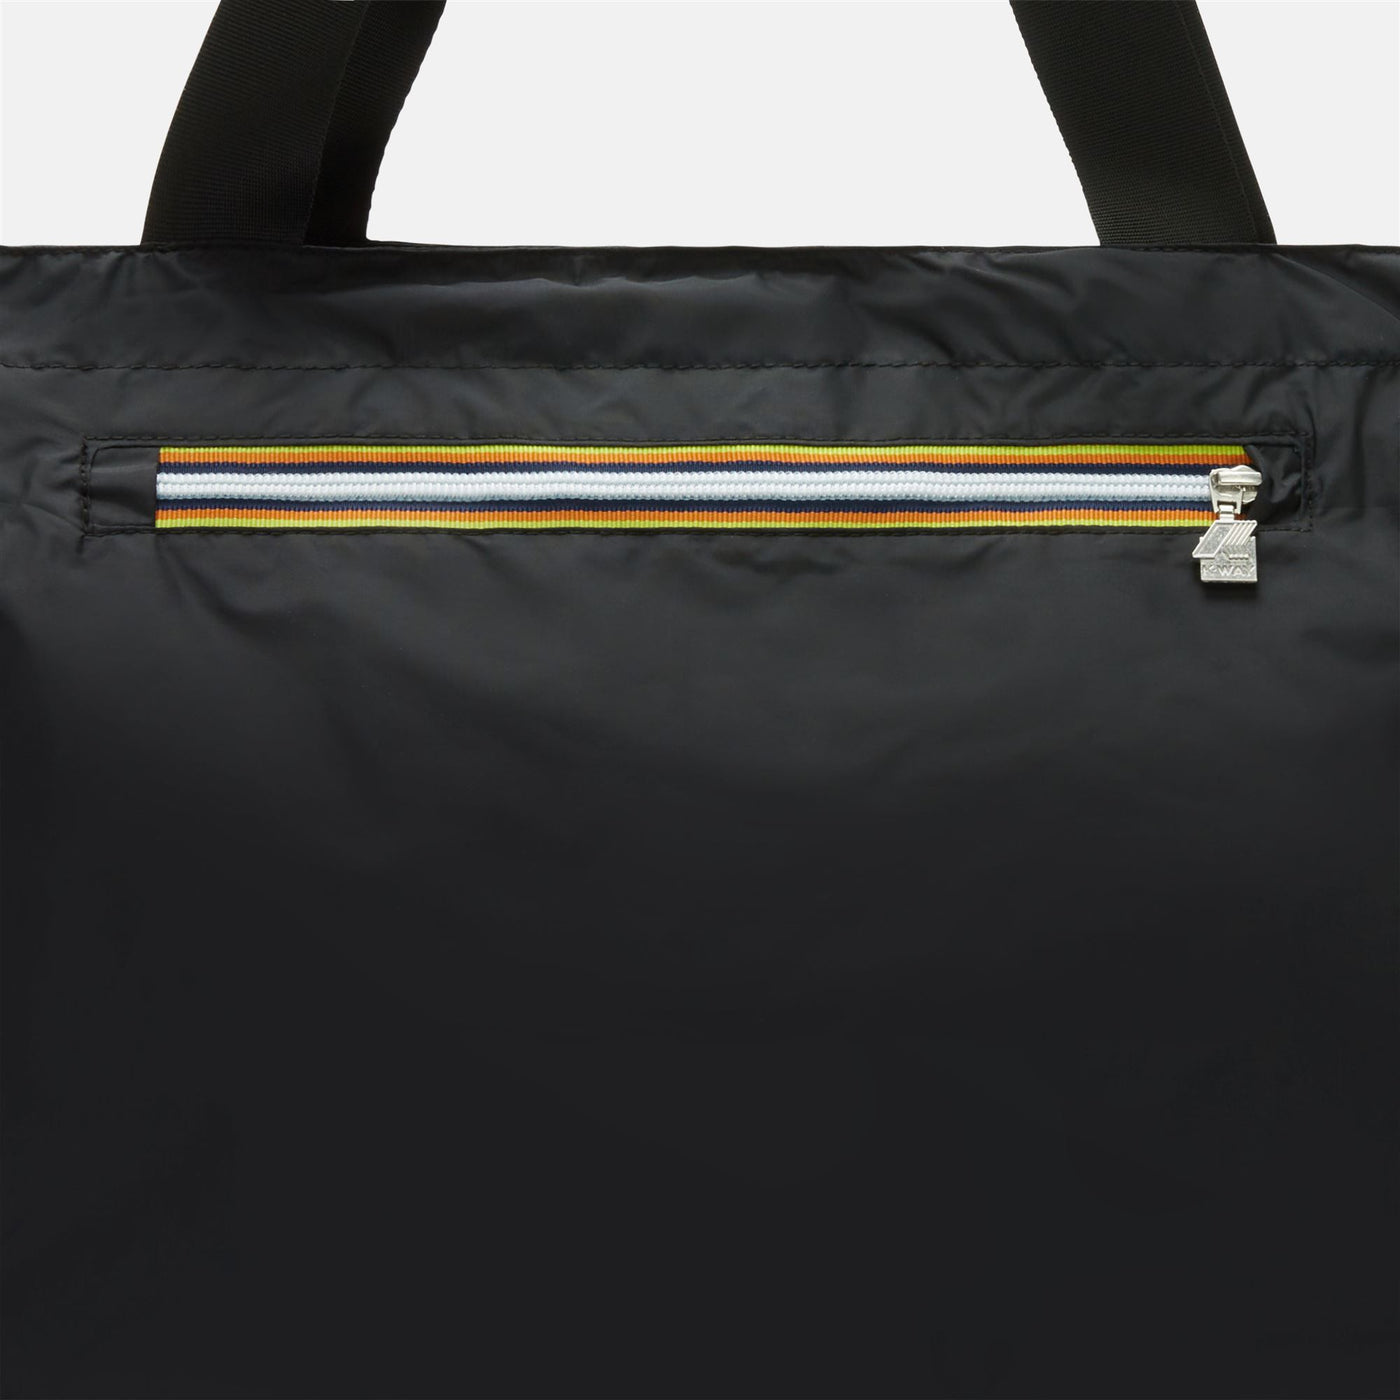 Bags Woman ERINA L Shopping Bag Black Pure | K-Way Dressed Side (jpg Rgb)		